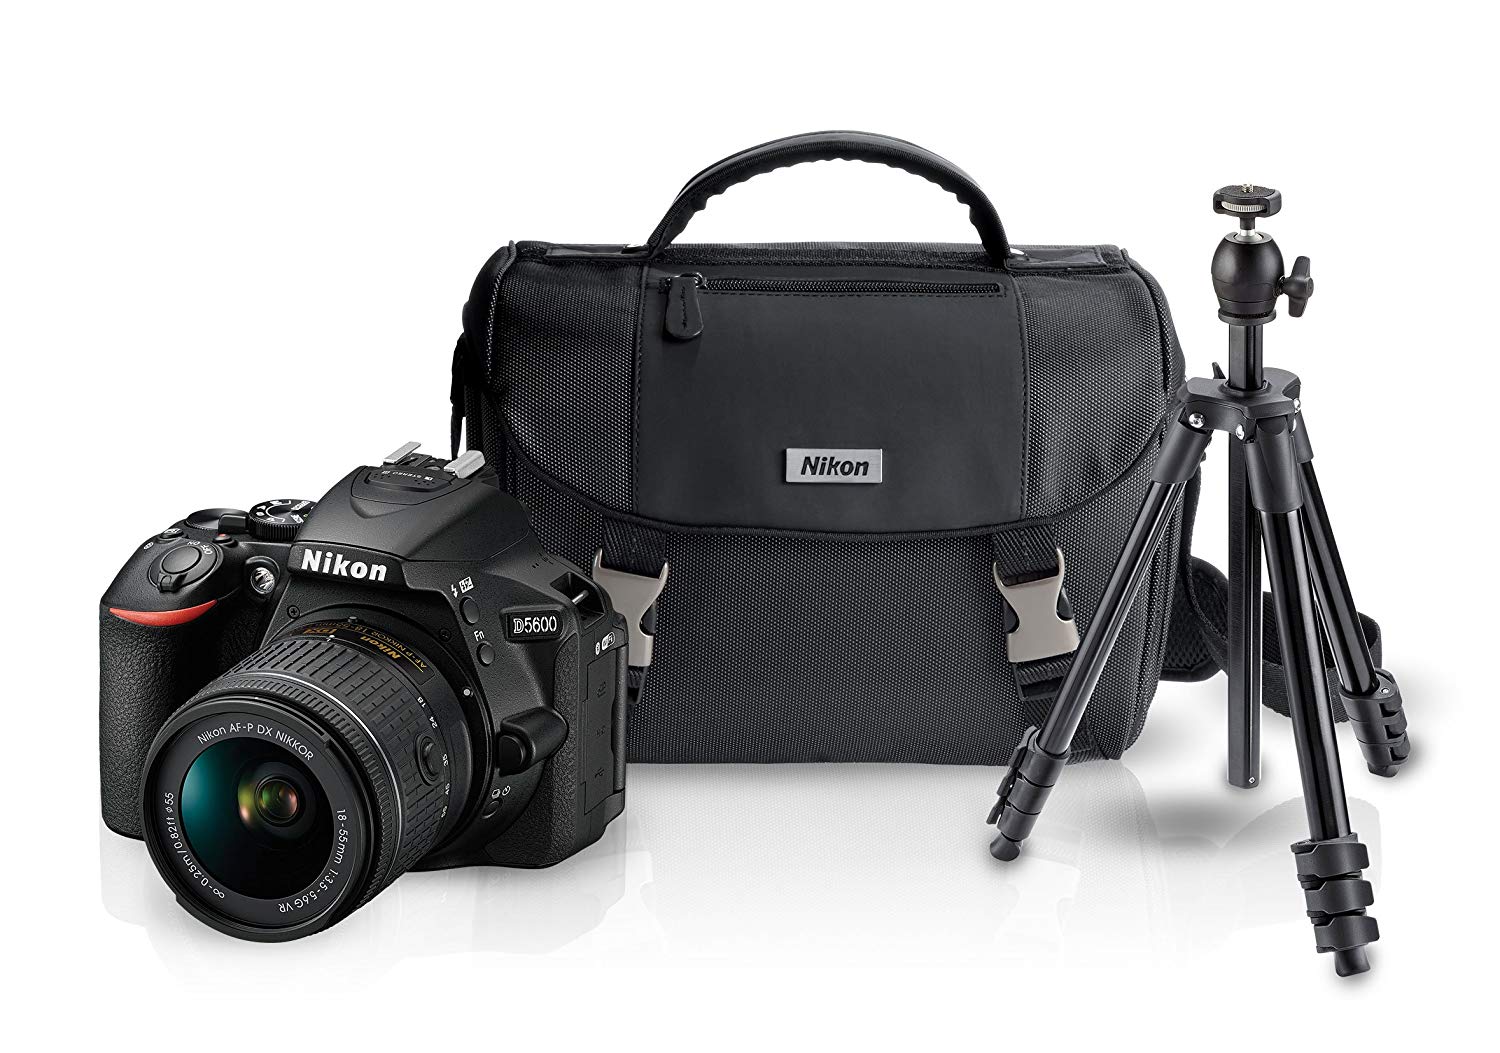 Nikon Bundle Cámara Reflex Body D5600, Lente AF-P DX 18-55mm f/3.5-5.6G VR, Estuche, Tripie y SD Card 16GB, color Negro.